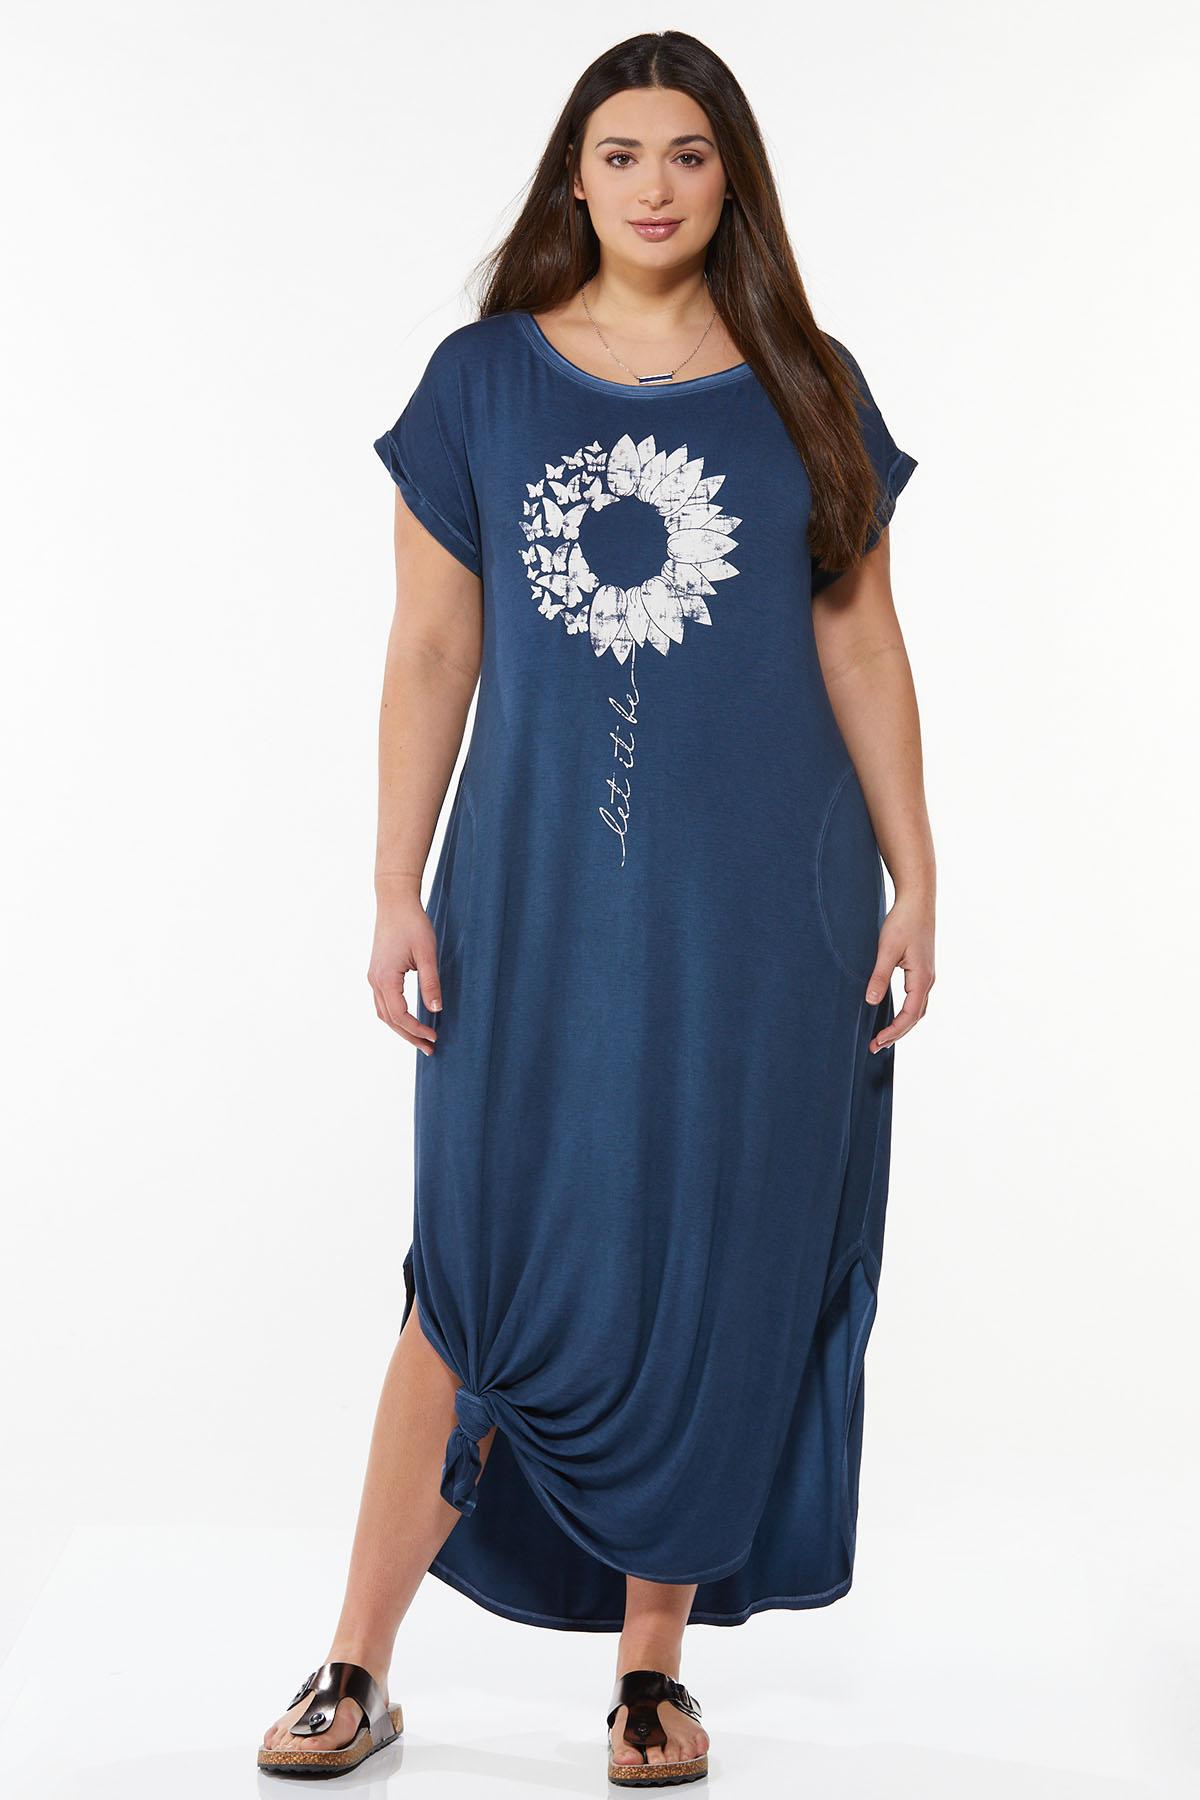 Plus Size Sunflower Graphic Tee Dress ...